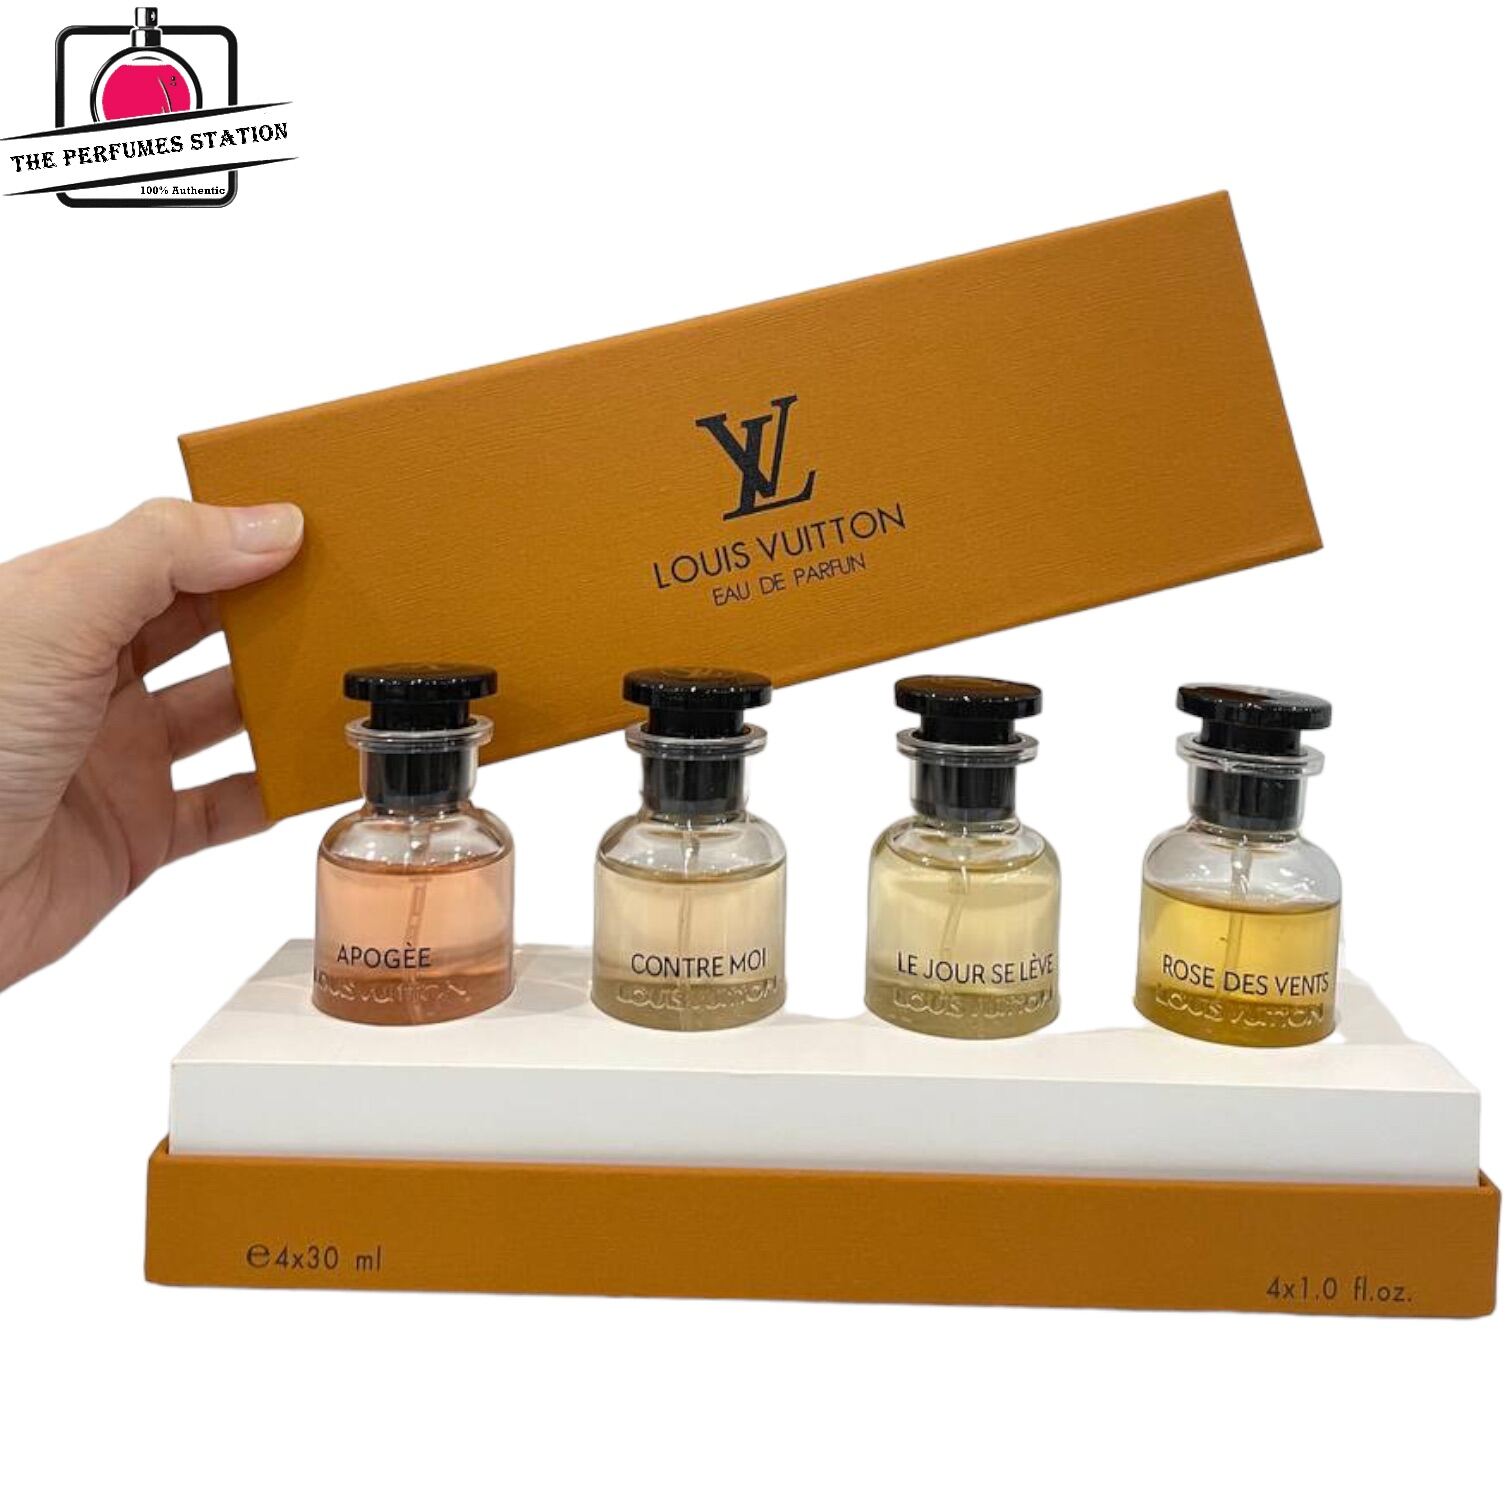 Chi tiết 70 về louis vuitton mini perfume set hay nhất  cdgdbentreeduvn